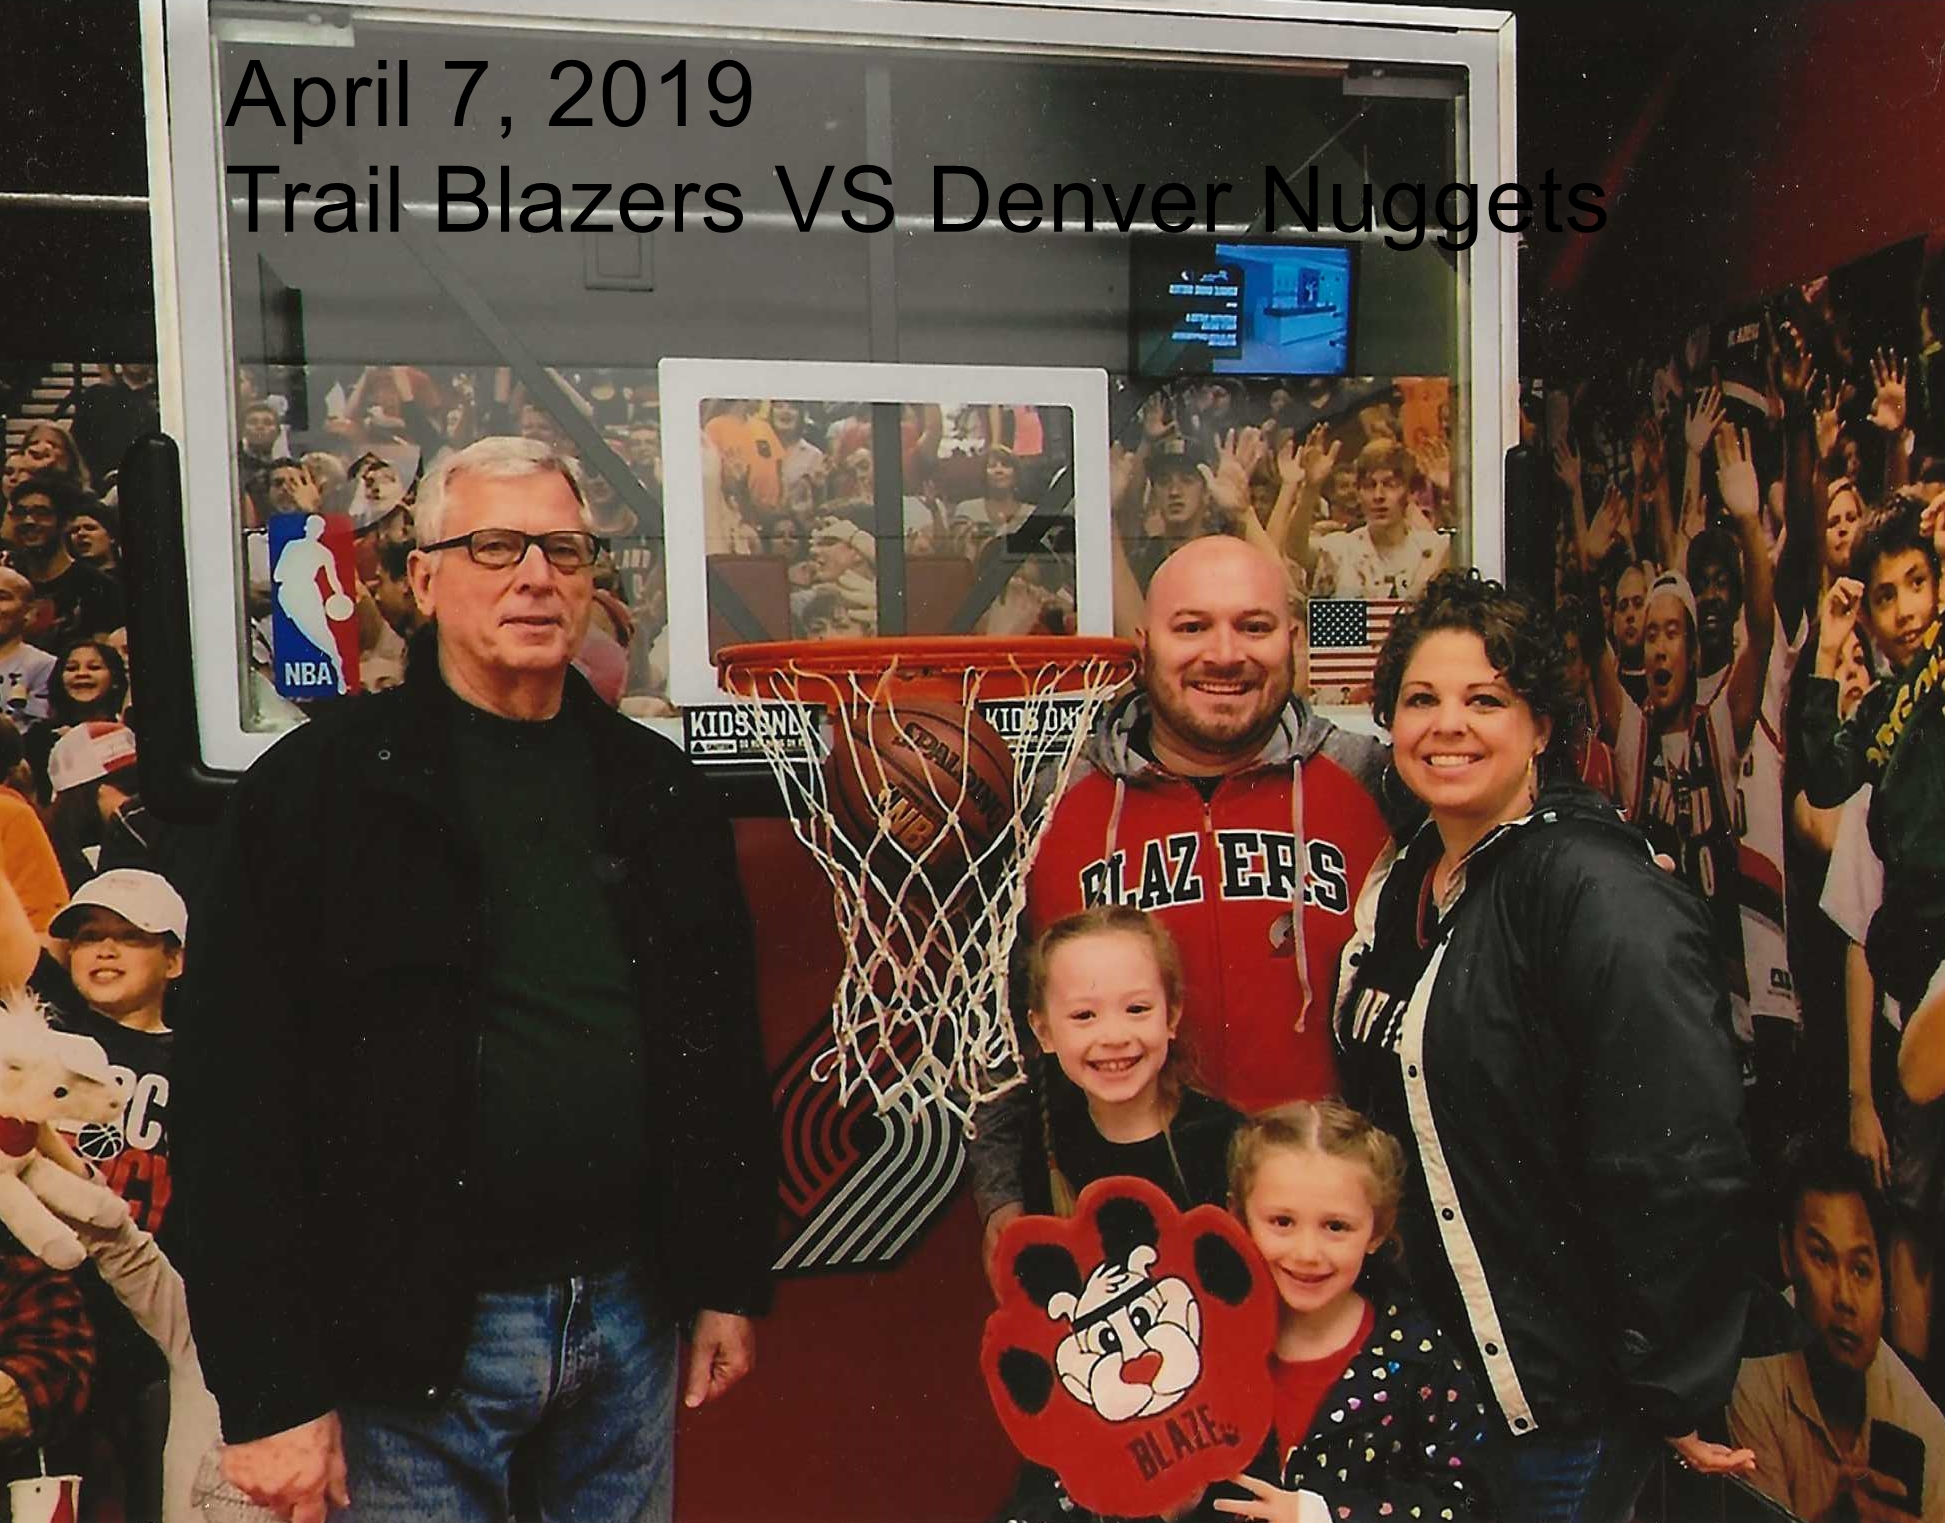 April 7, 2019 at Portland Trail Blazer VS Denver Nuggets.